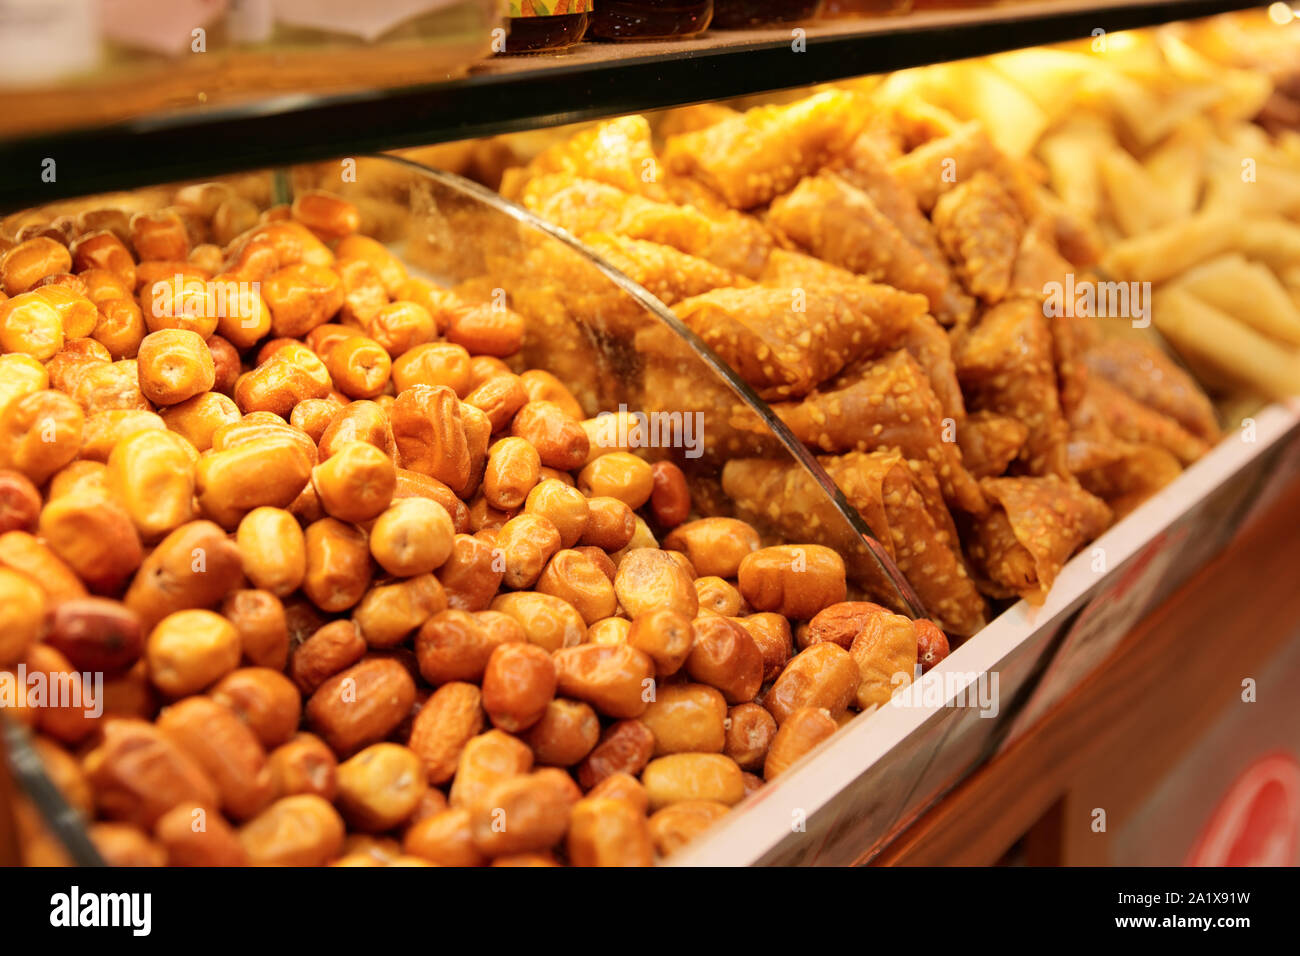 Nuts and baklava on market shelf, close-up Stock Photo